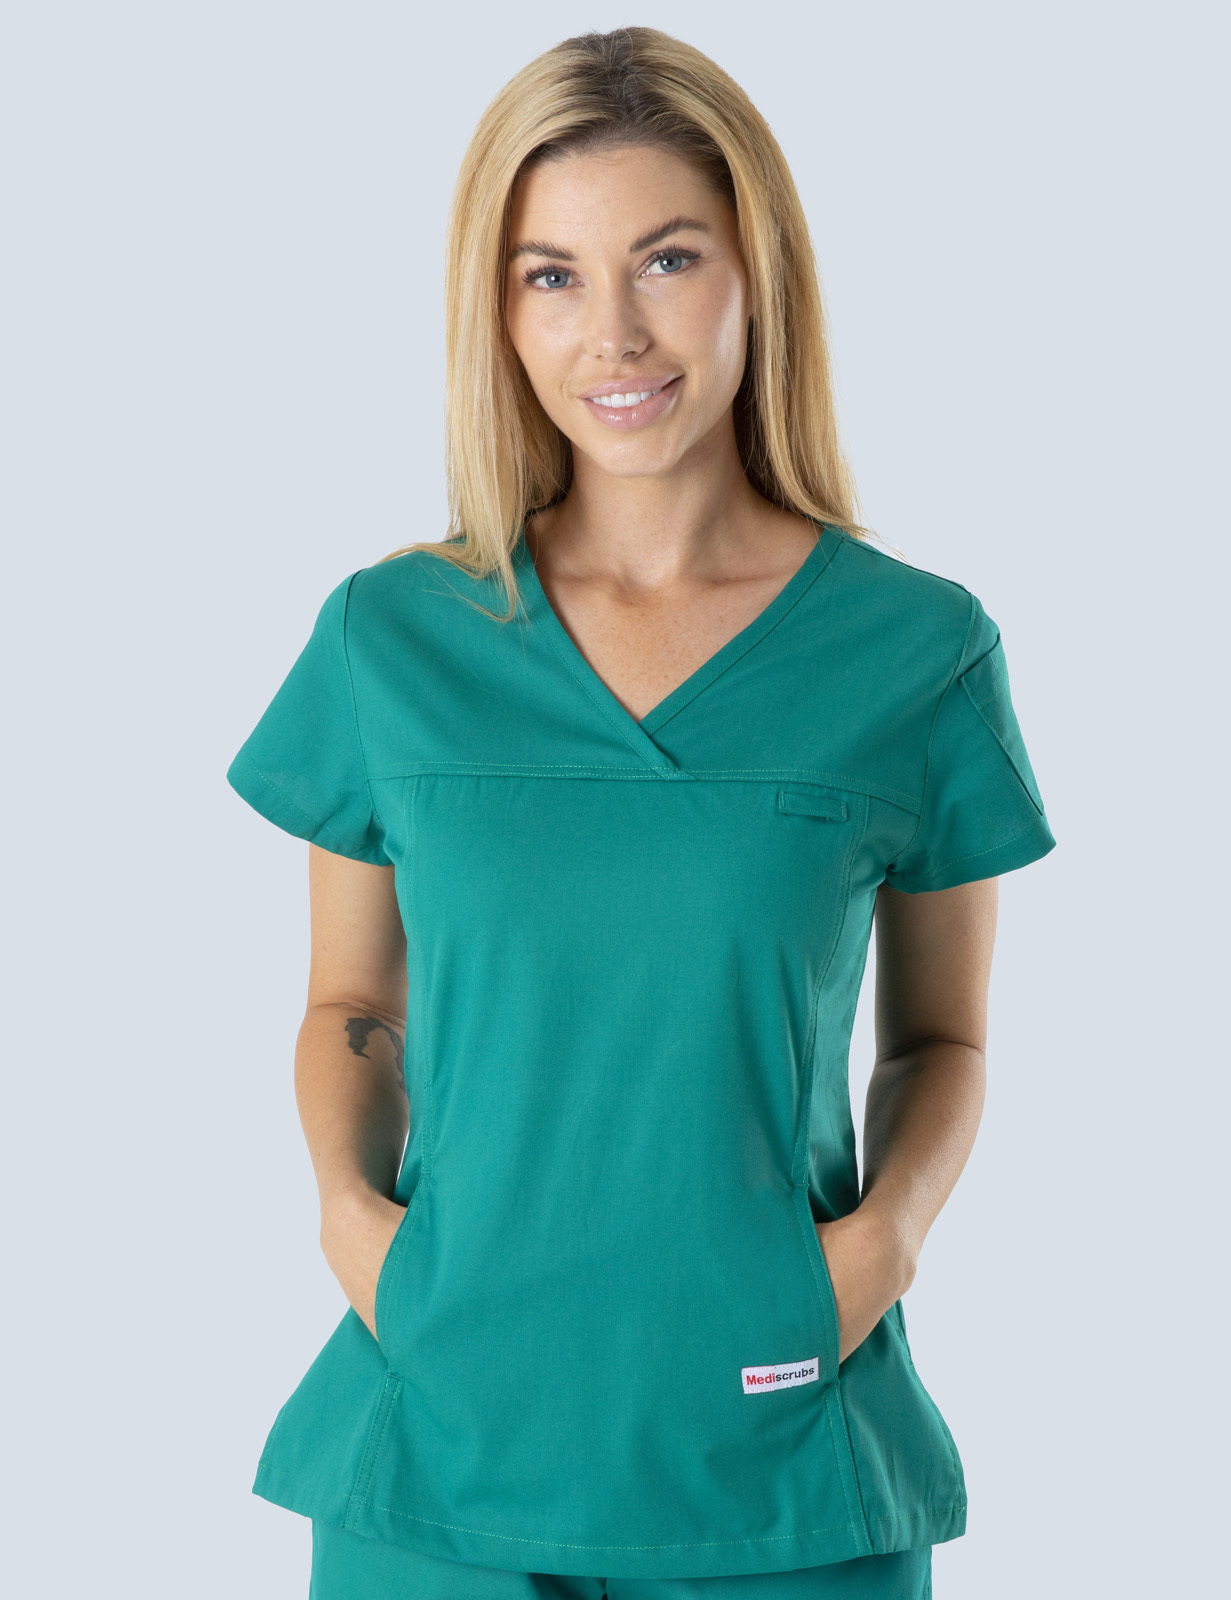 Queensland Children's Hospital Emergency Department Registered  Nurse  Uniform Top Bundle  (Women's Fit Top in Hunter incl Logos)